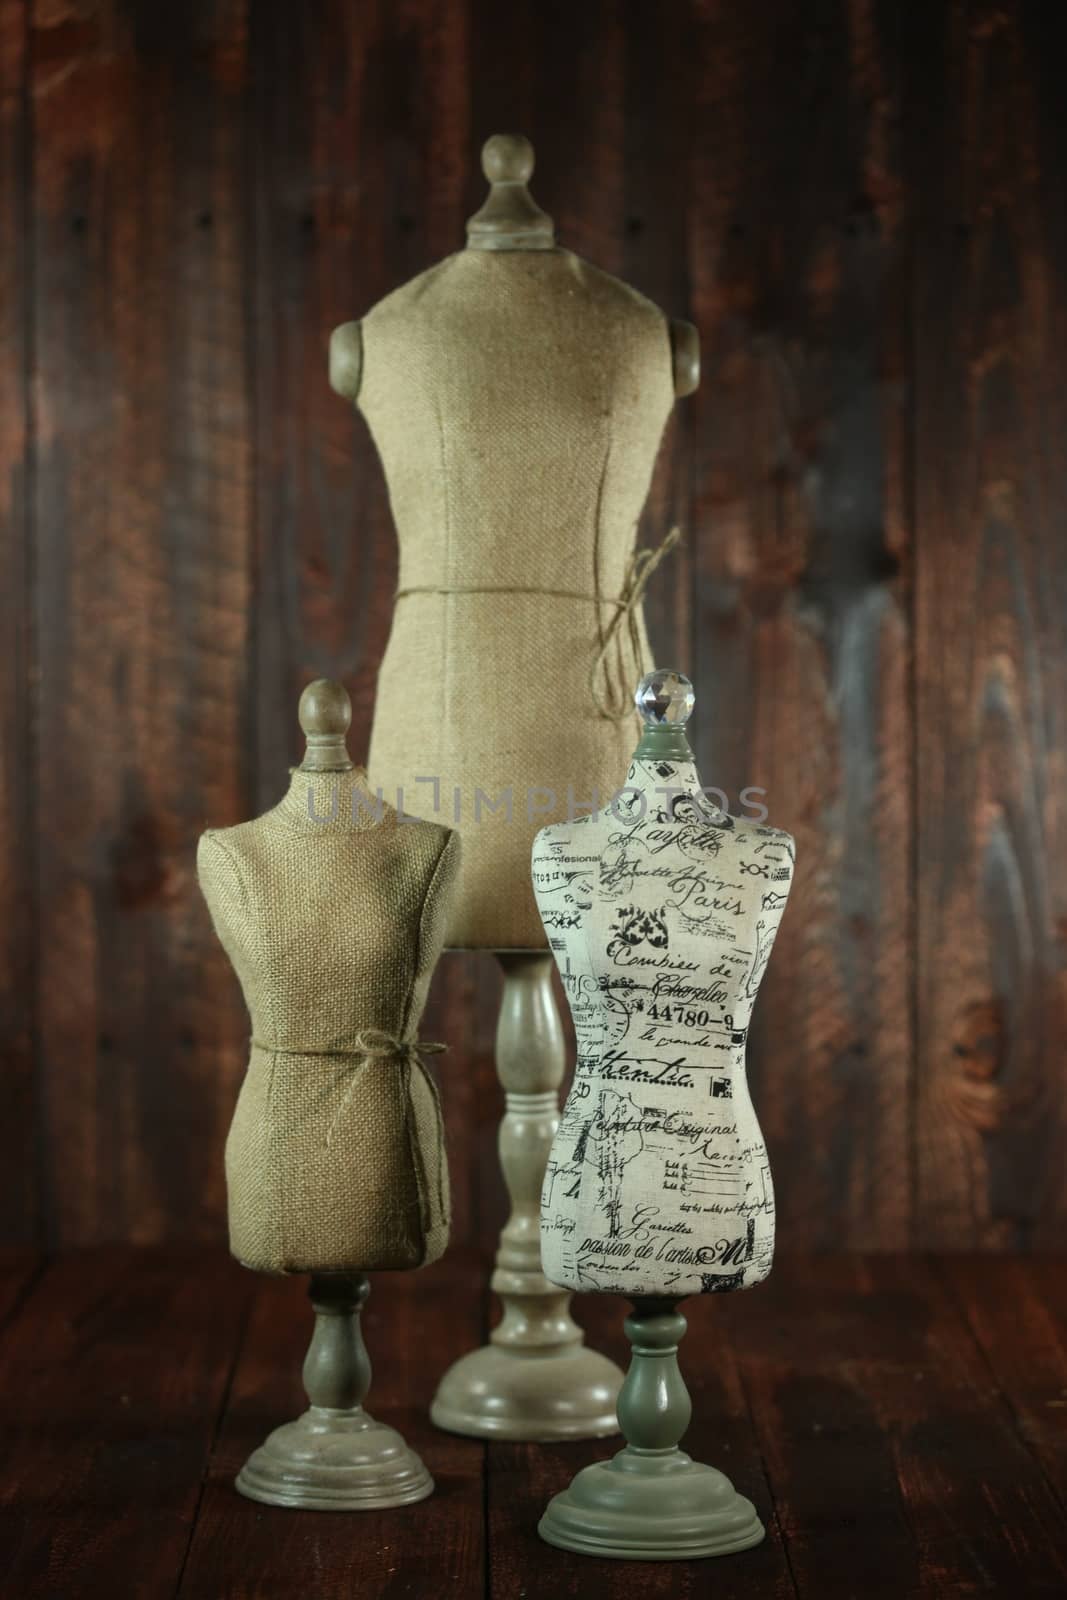 Antique Mannequin Busts on Wood Grunge Background by tobkatrina